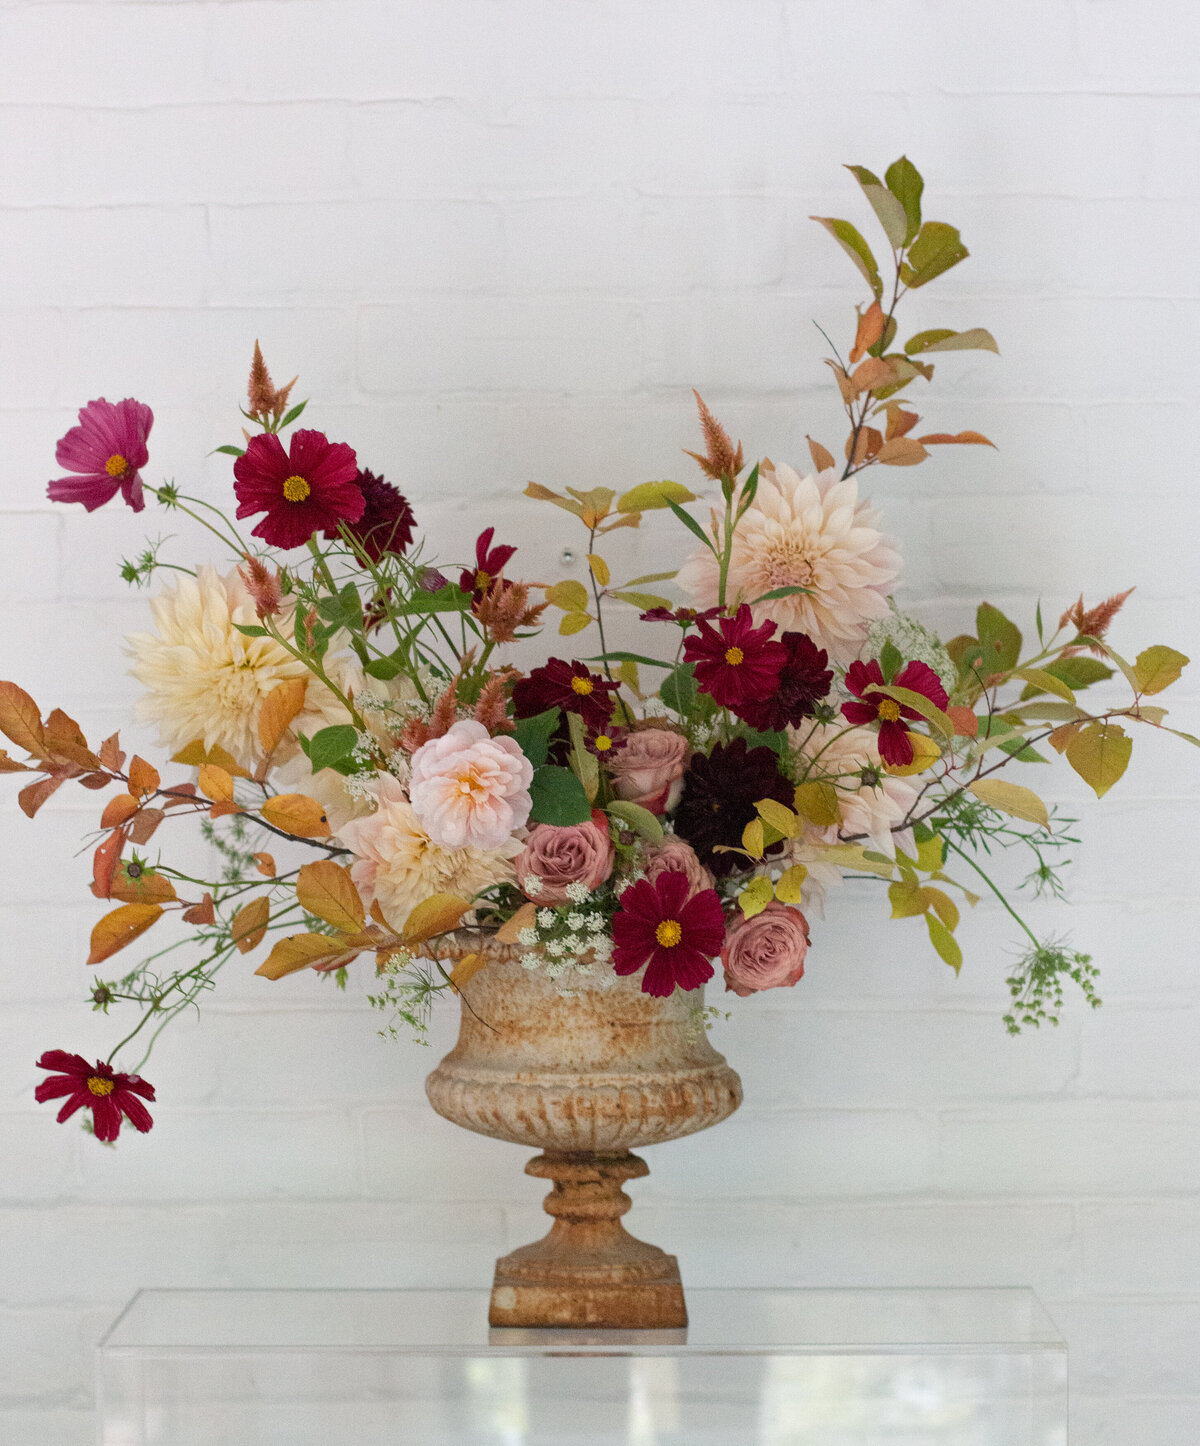 Atelier-Carmel-Wedding-Florist-GALLERY-Arrangements-32